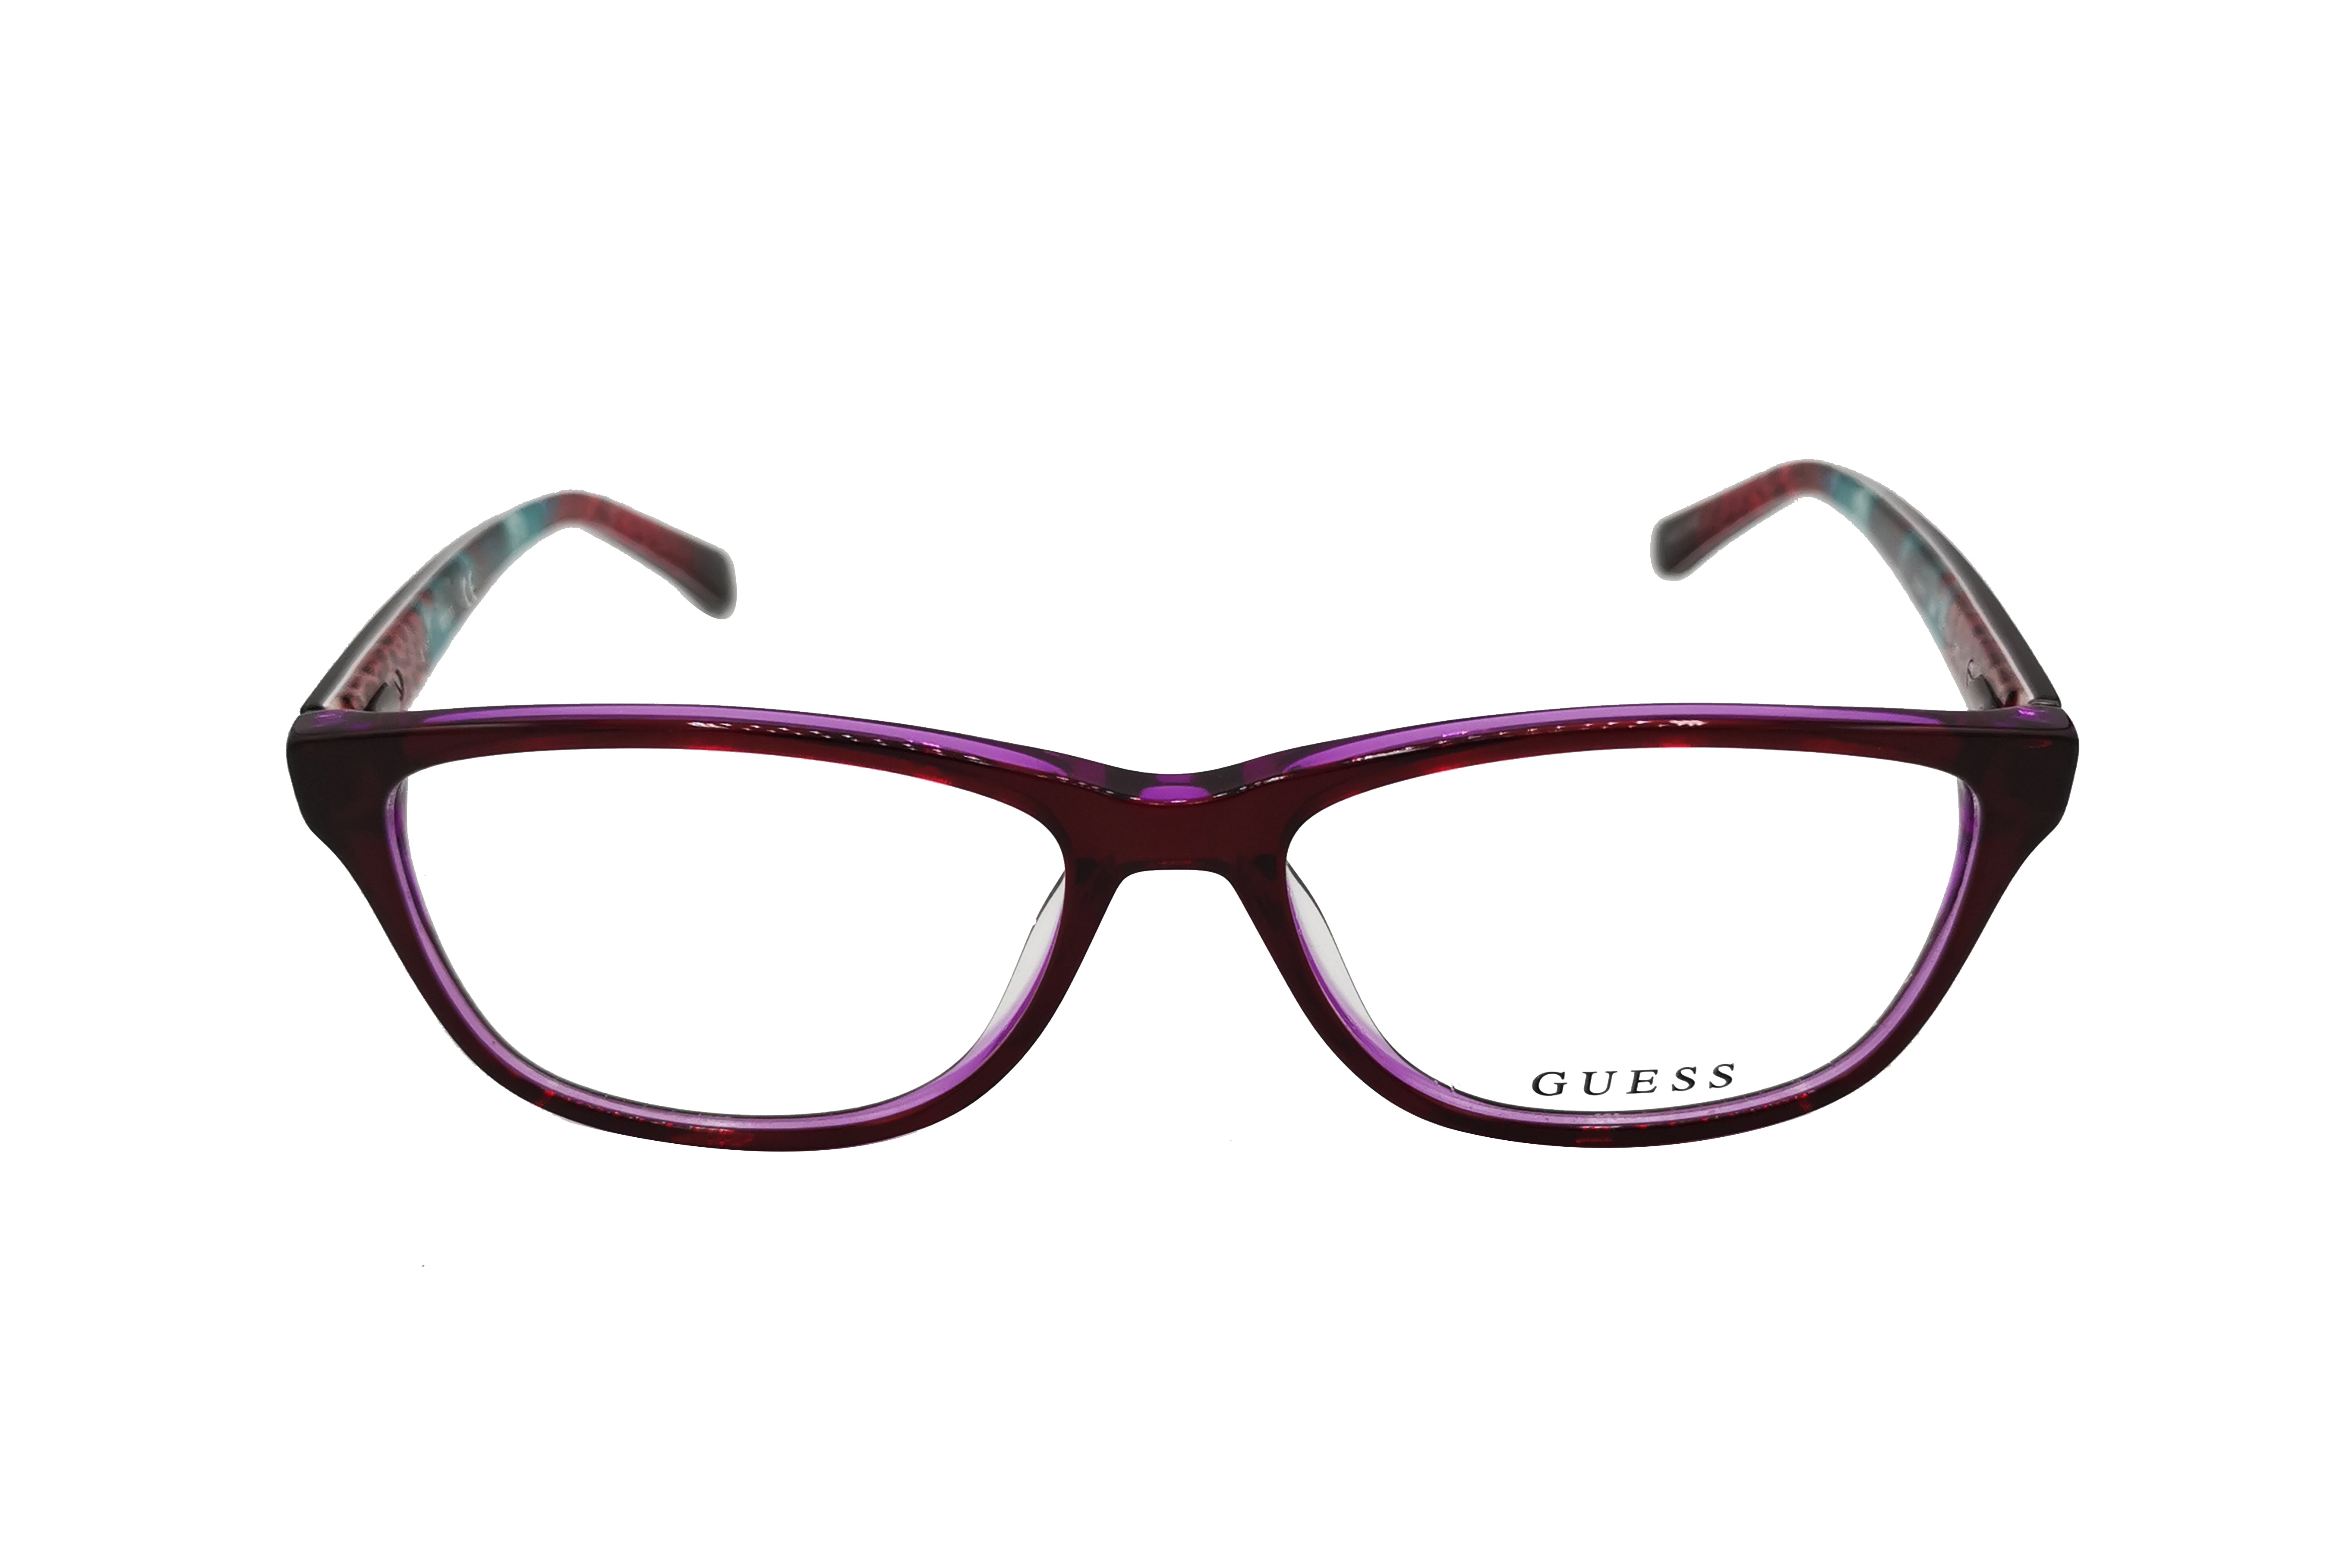 NS Luxury - 2513 - Red Wine - Eyeglasses